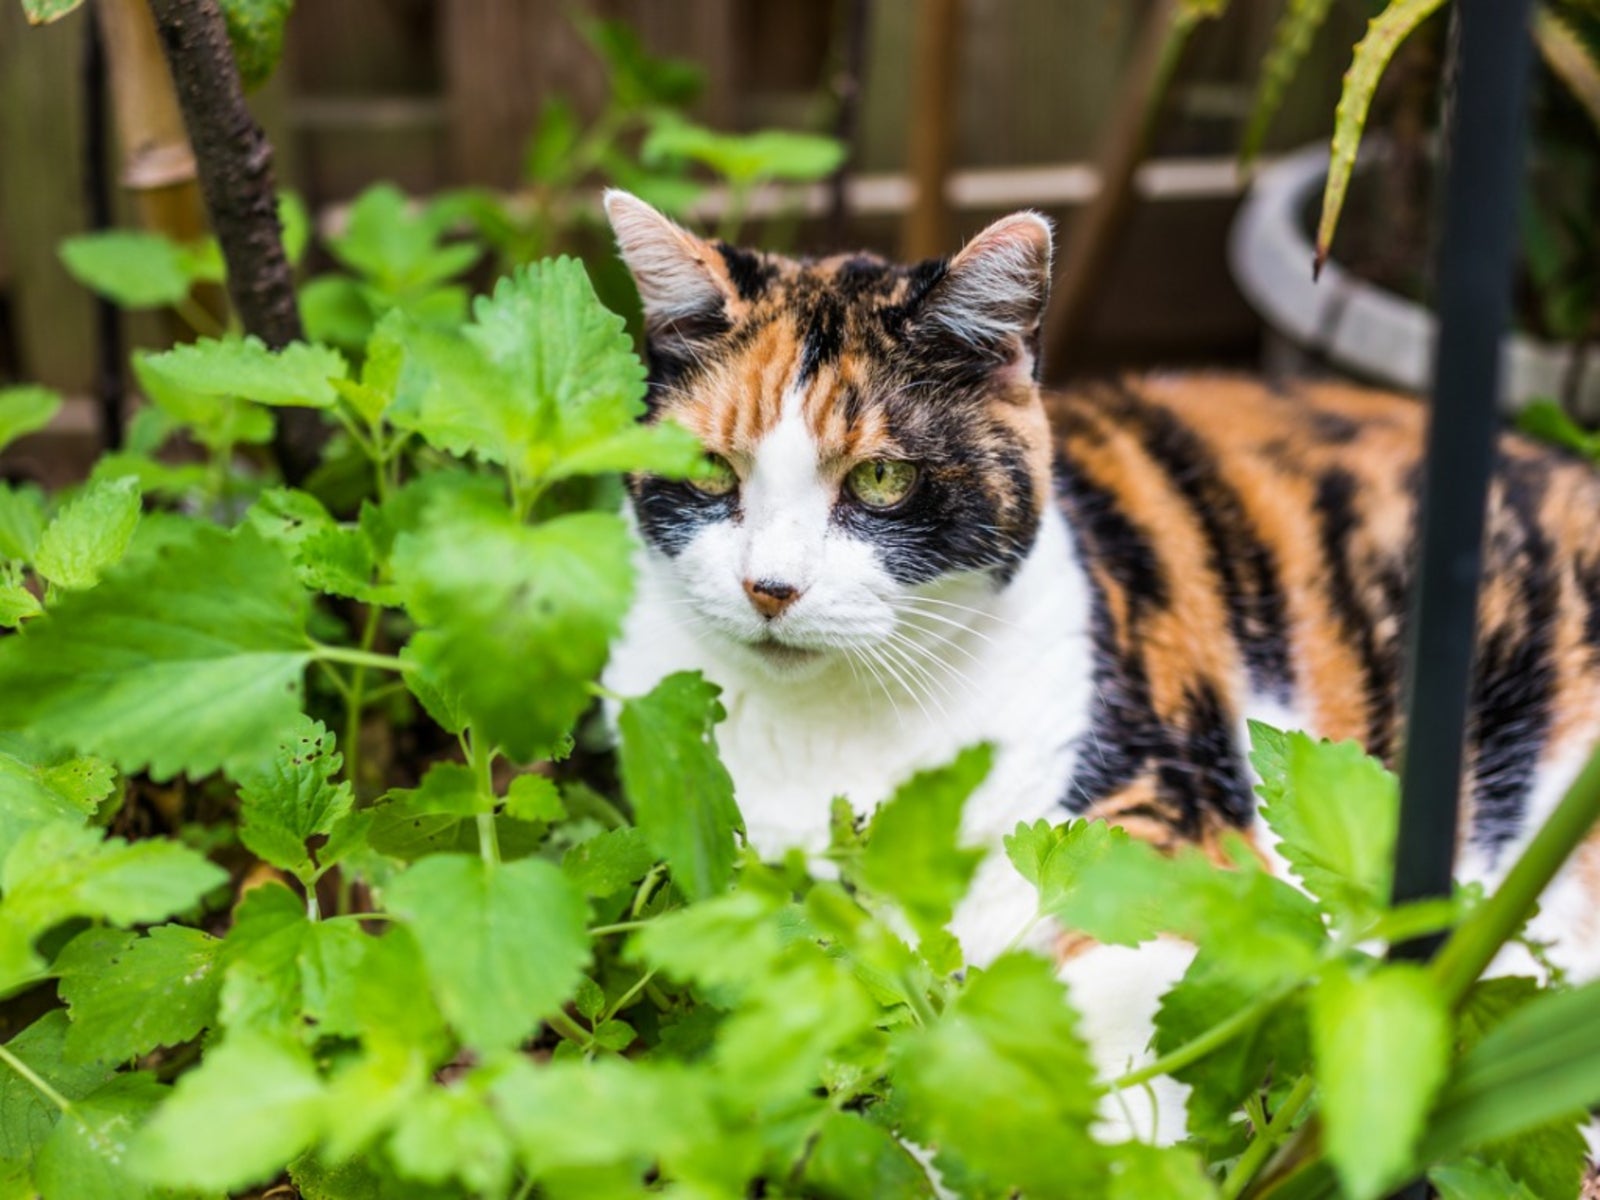 Growing Catnip: Information On Catnip Plants In The Garden